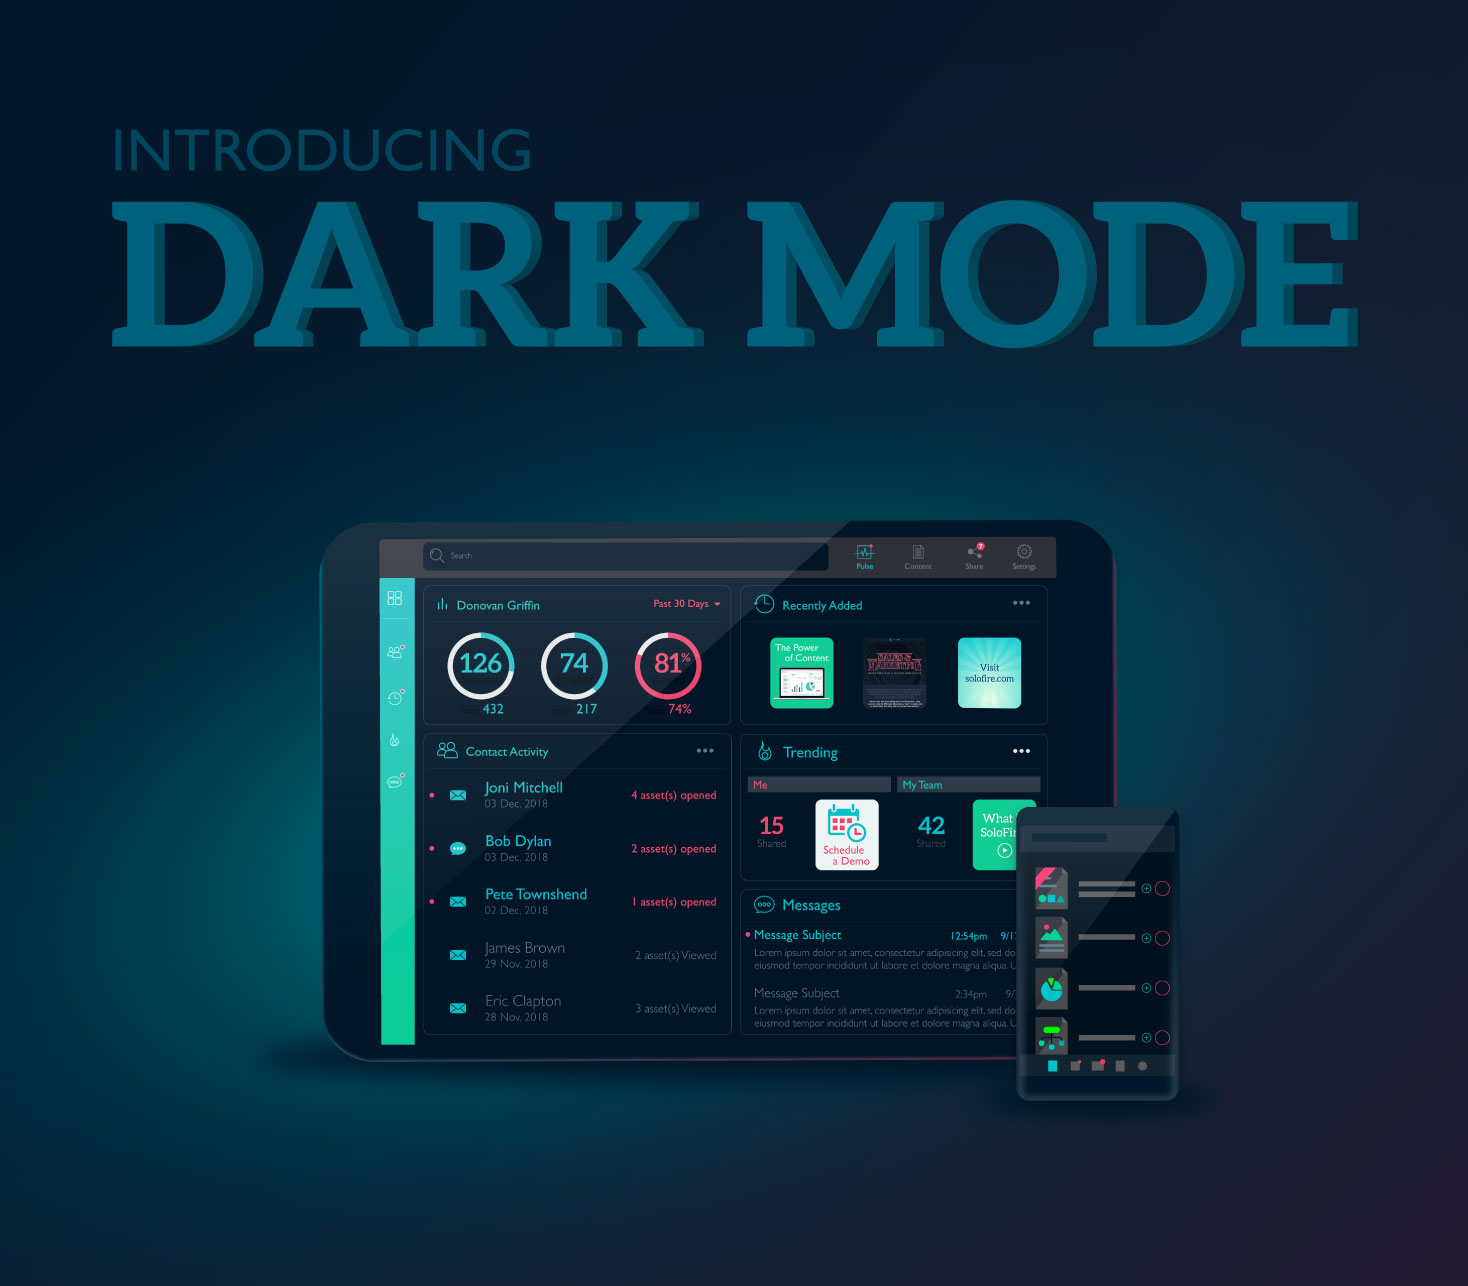 Introducing dark mode